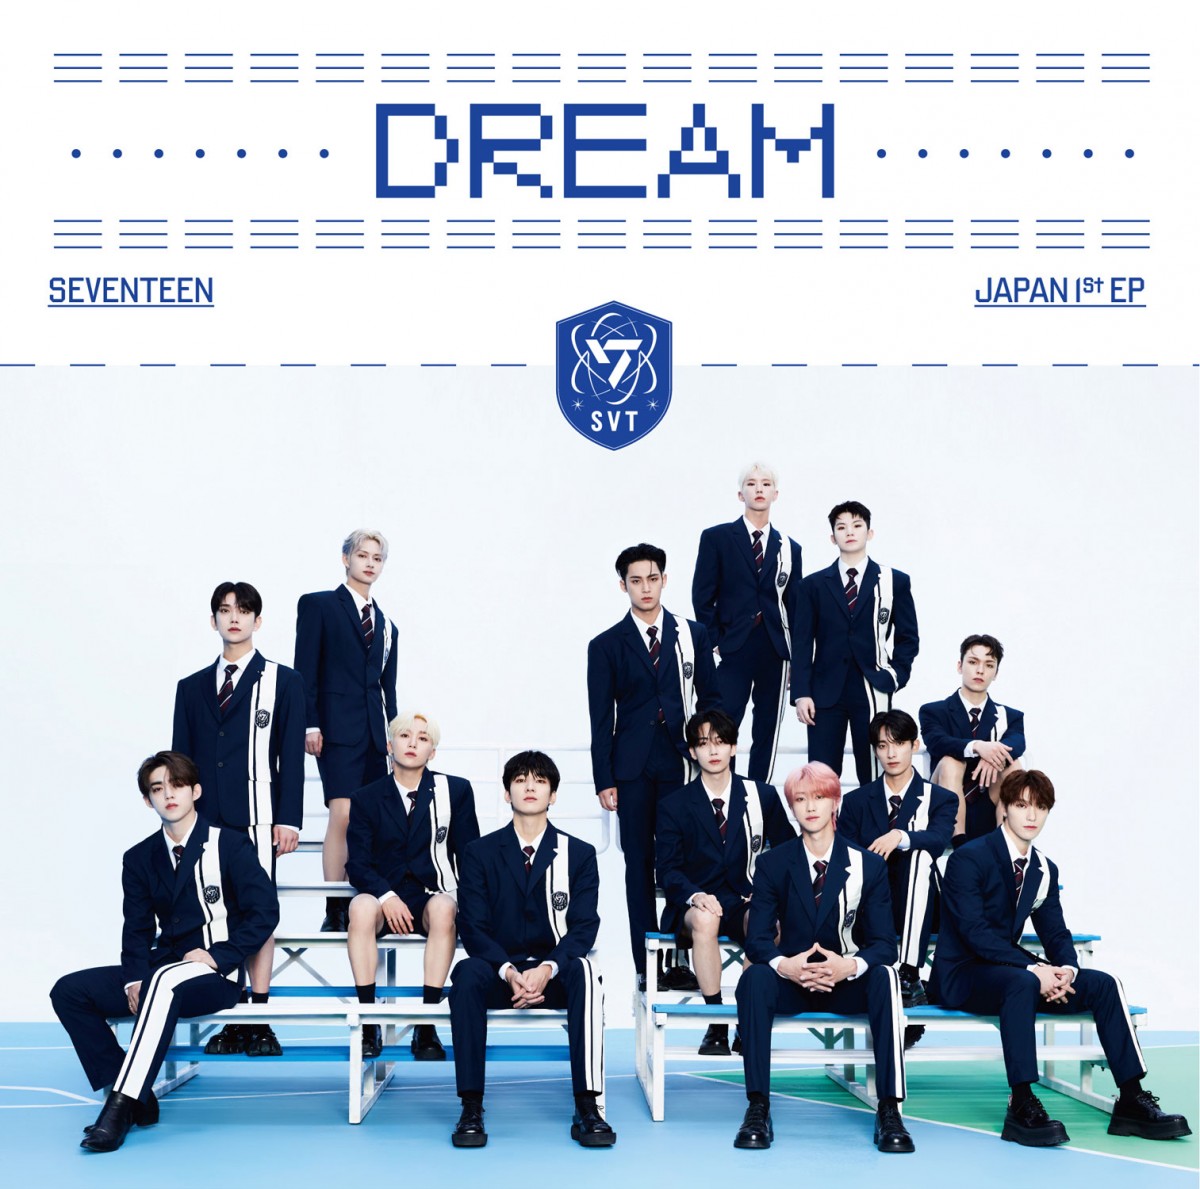 SEVENTEEN、最新アルバム『DREAM』が自己最高週間売上で1位【オリコン